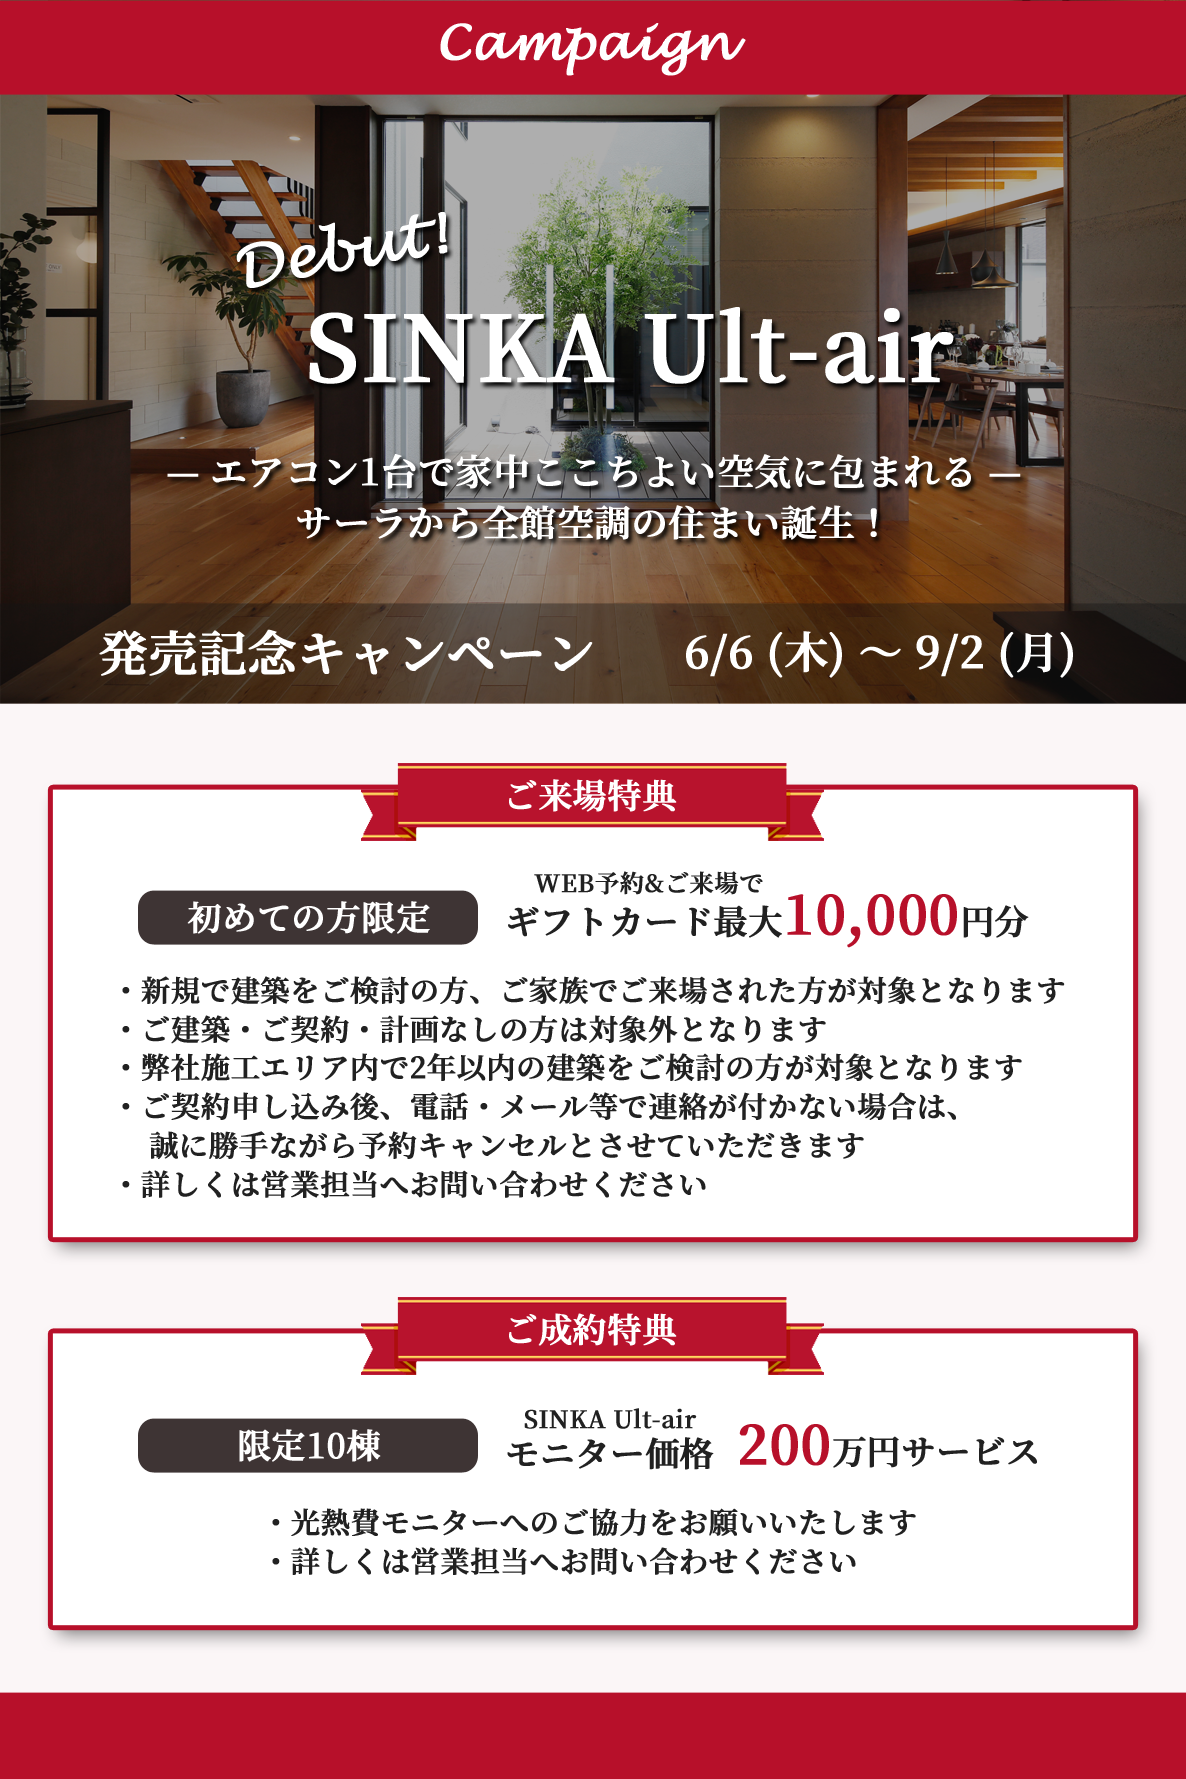 SINKA Ult-air 発売記念キャンペーン